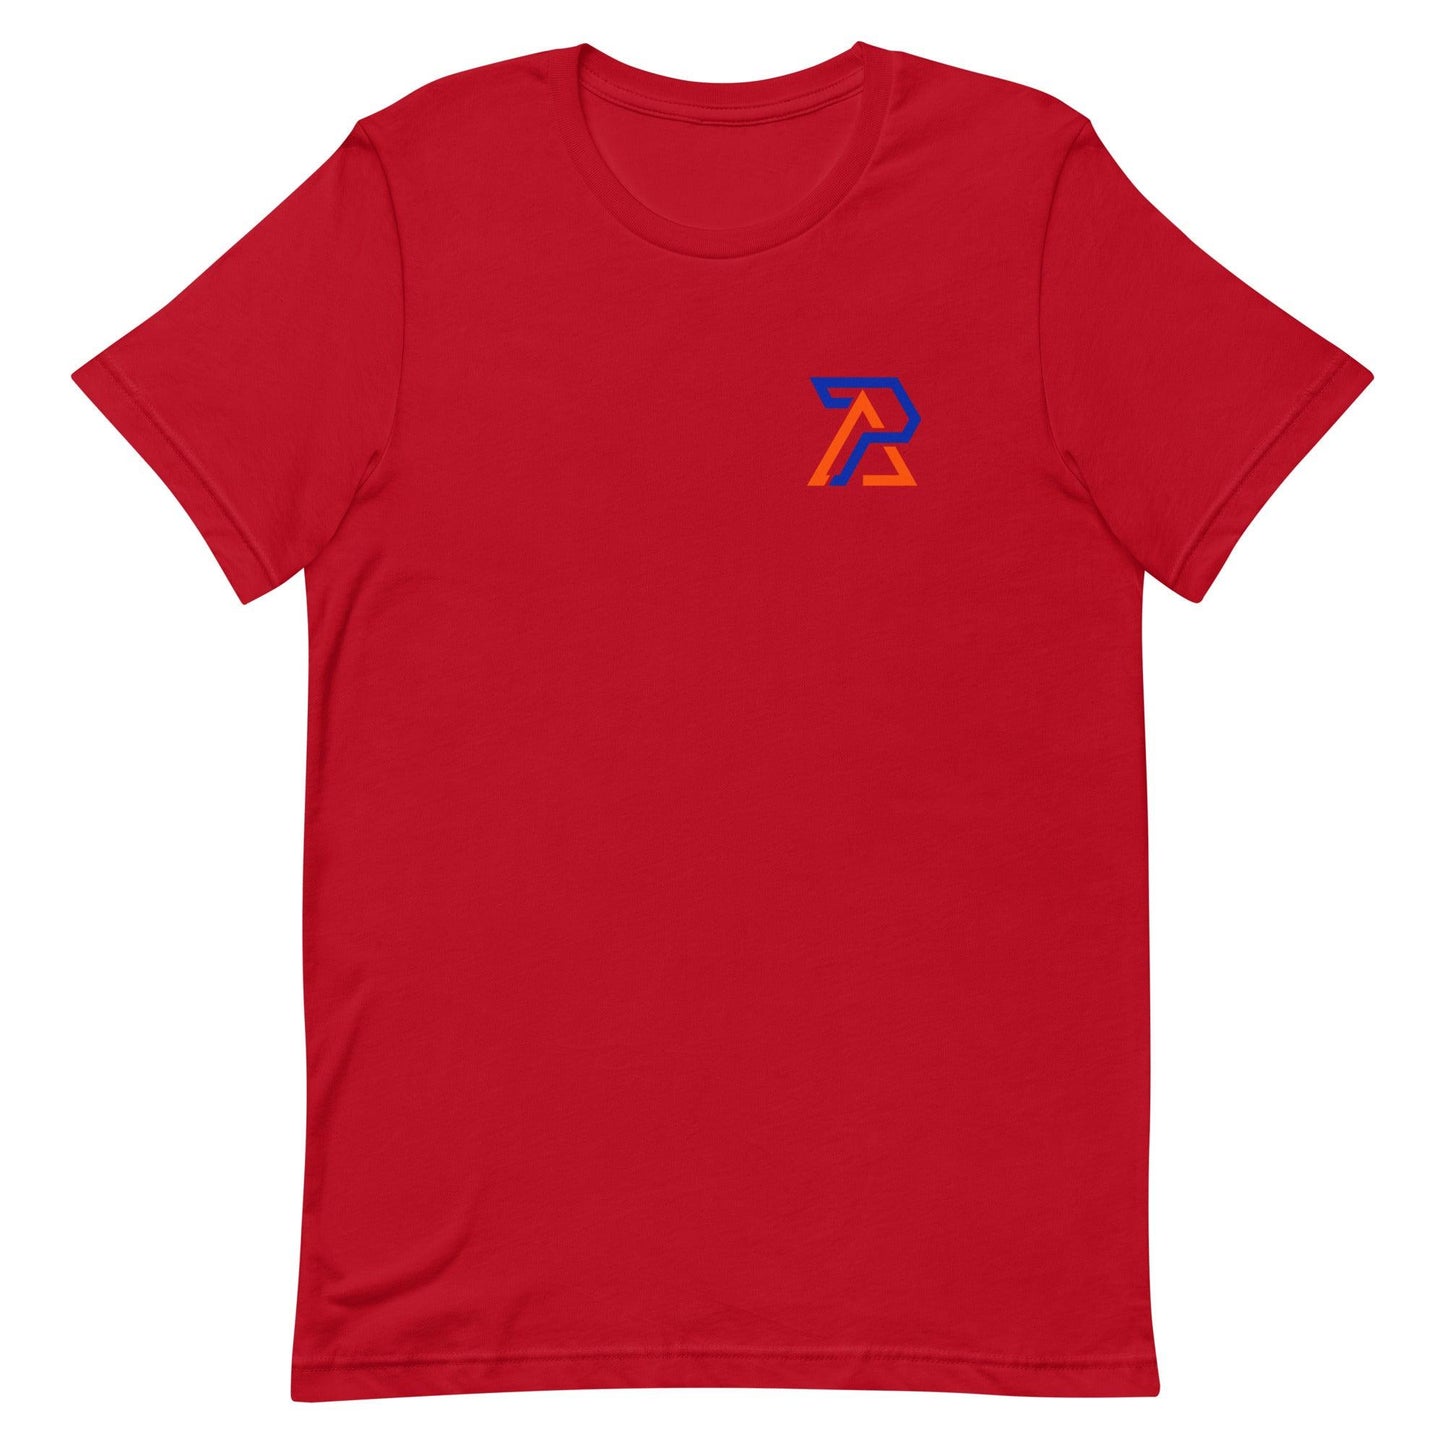 Philip Abner “Signature” t-shirt - Fan Arch